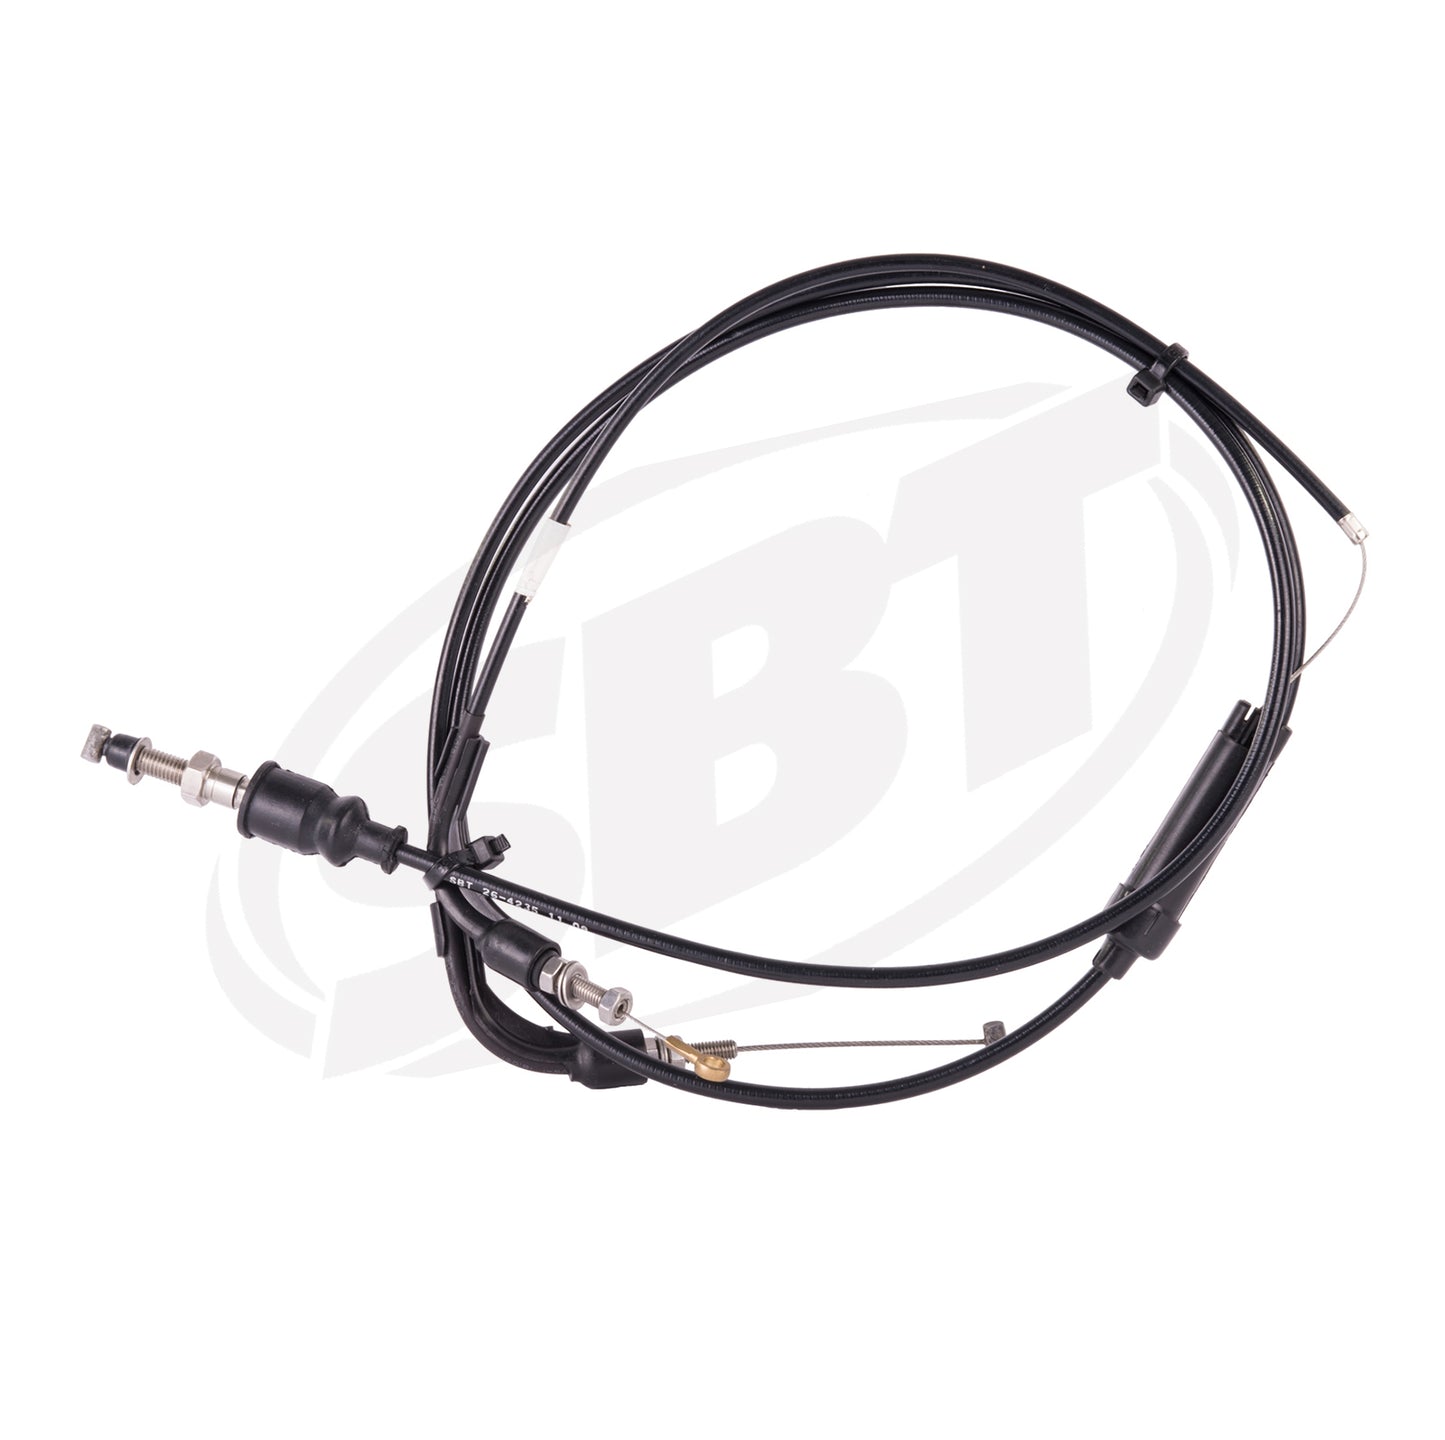 SBT Kawasaki Throttle Cable 1100 Ultra 130 54012-3770 2003 2004 ( PRE ORDER )